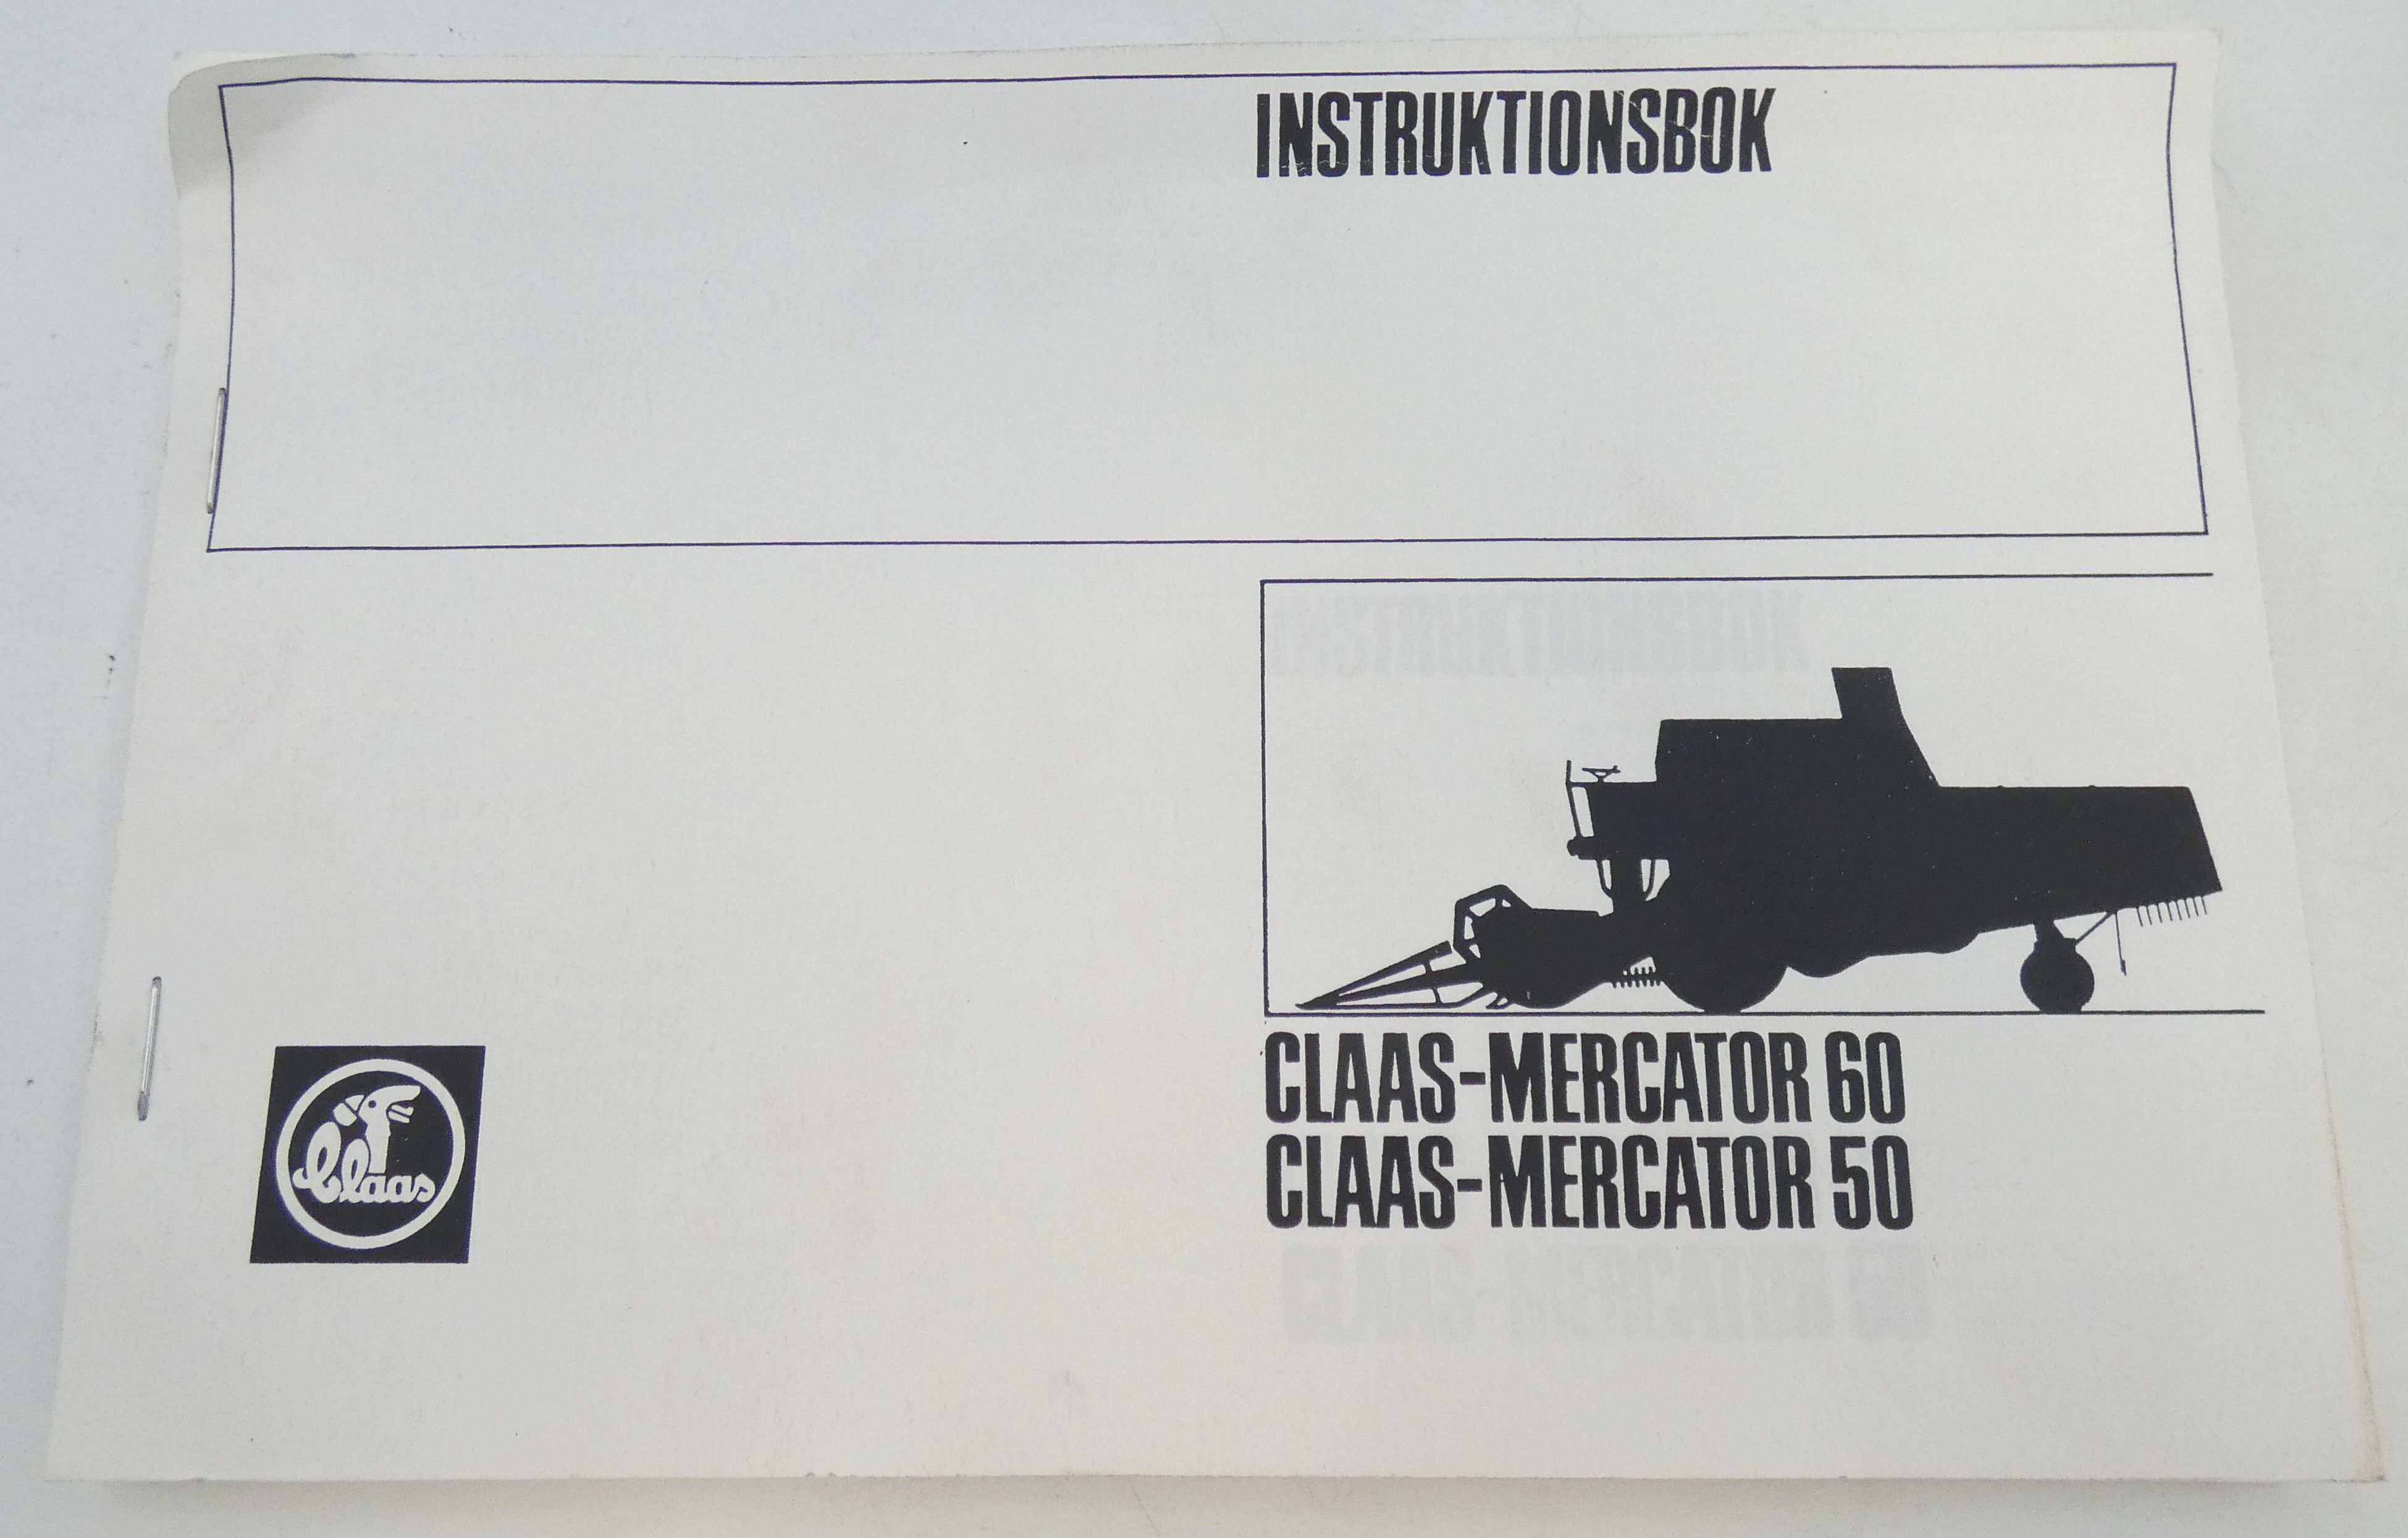 Claas-Mercator 60/50 instruktionsbok + lubrication chart.